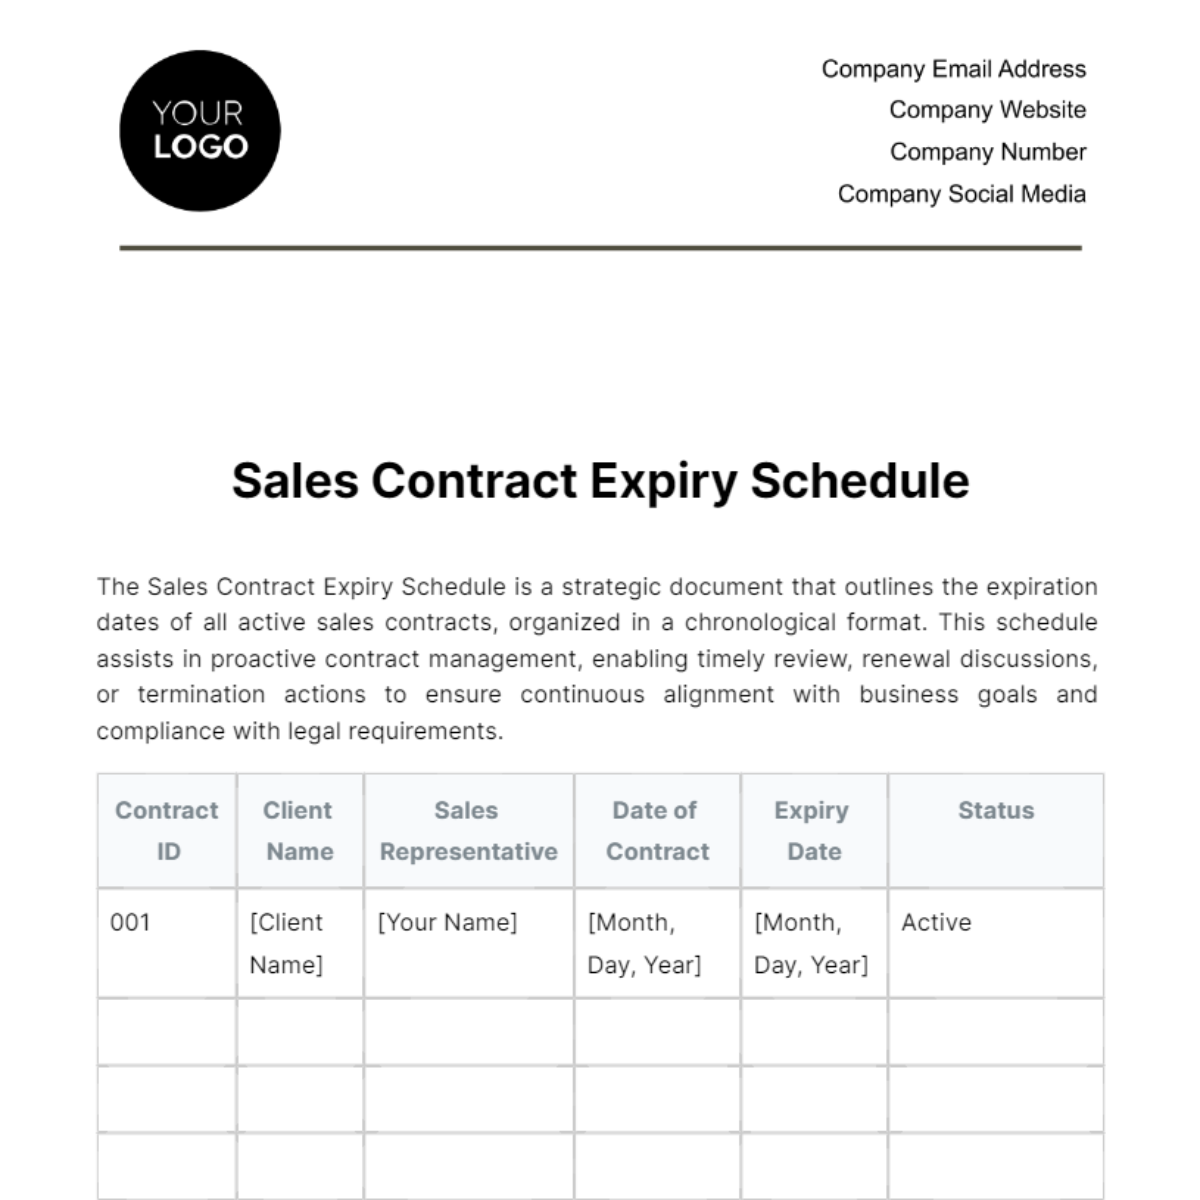 Sales Contract Expiry Schedule Template